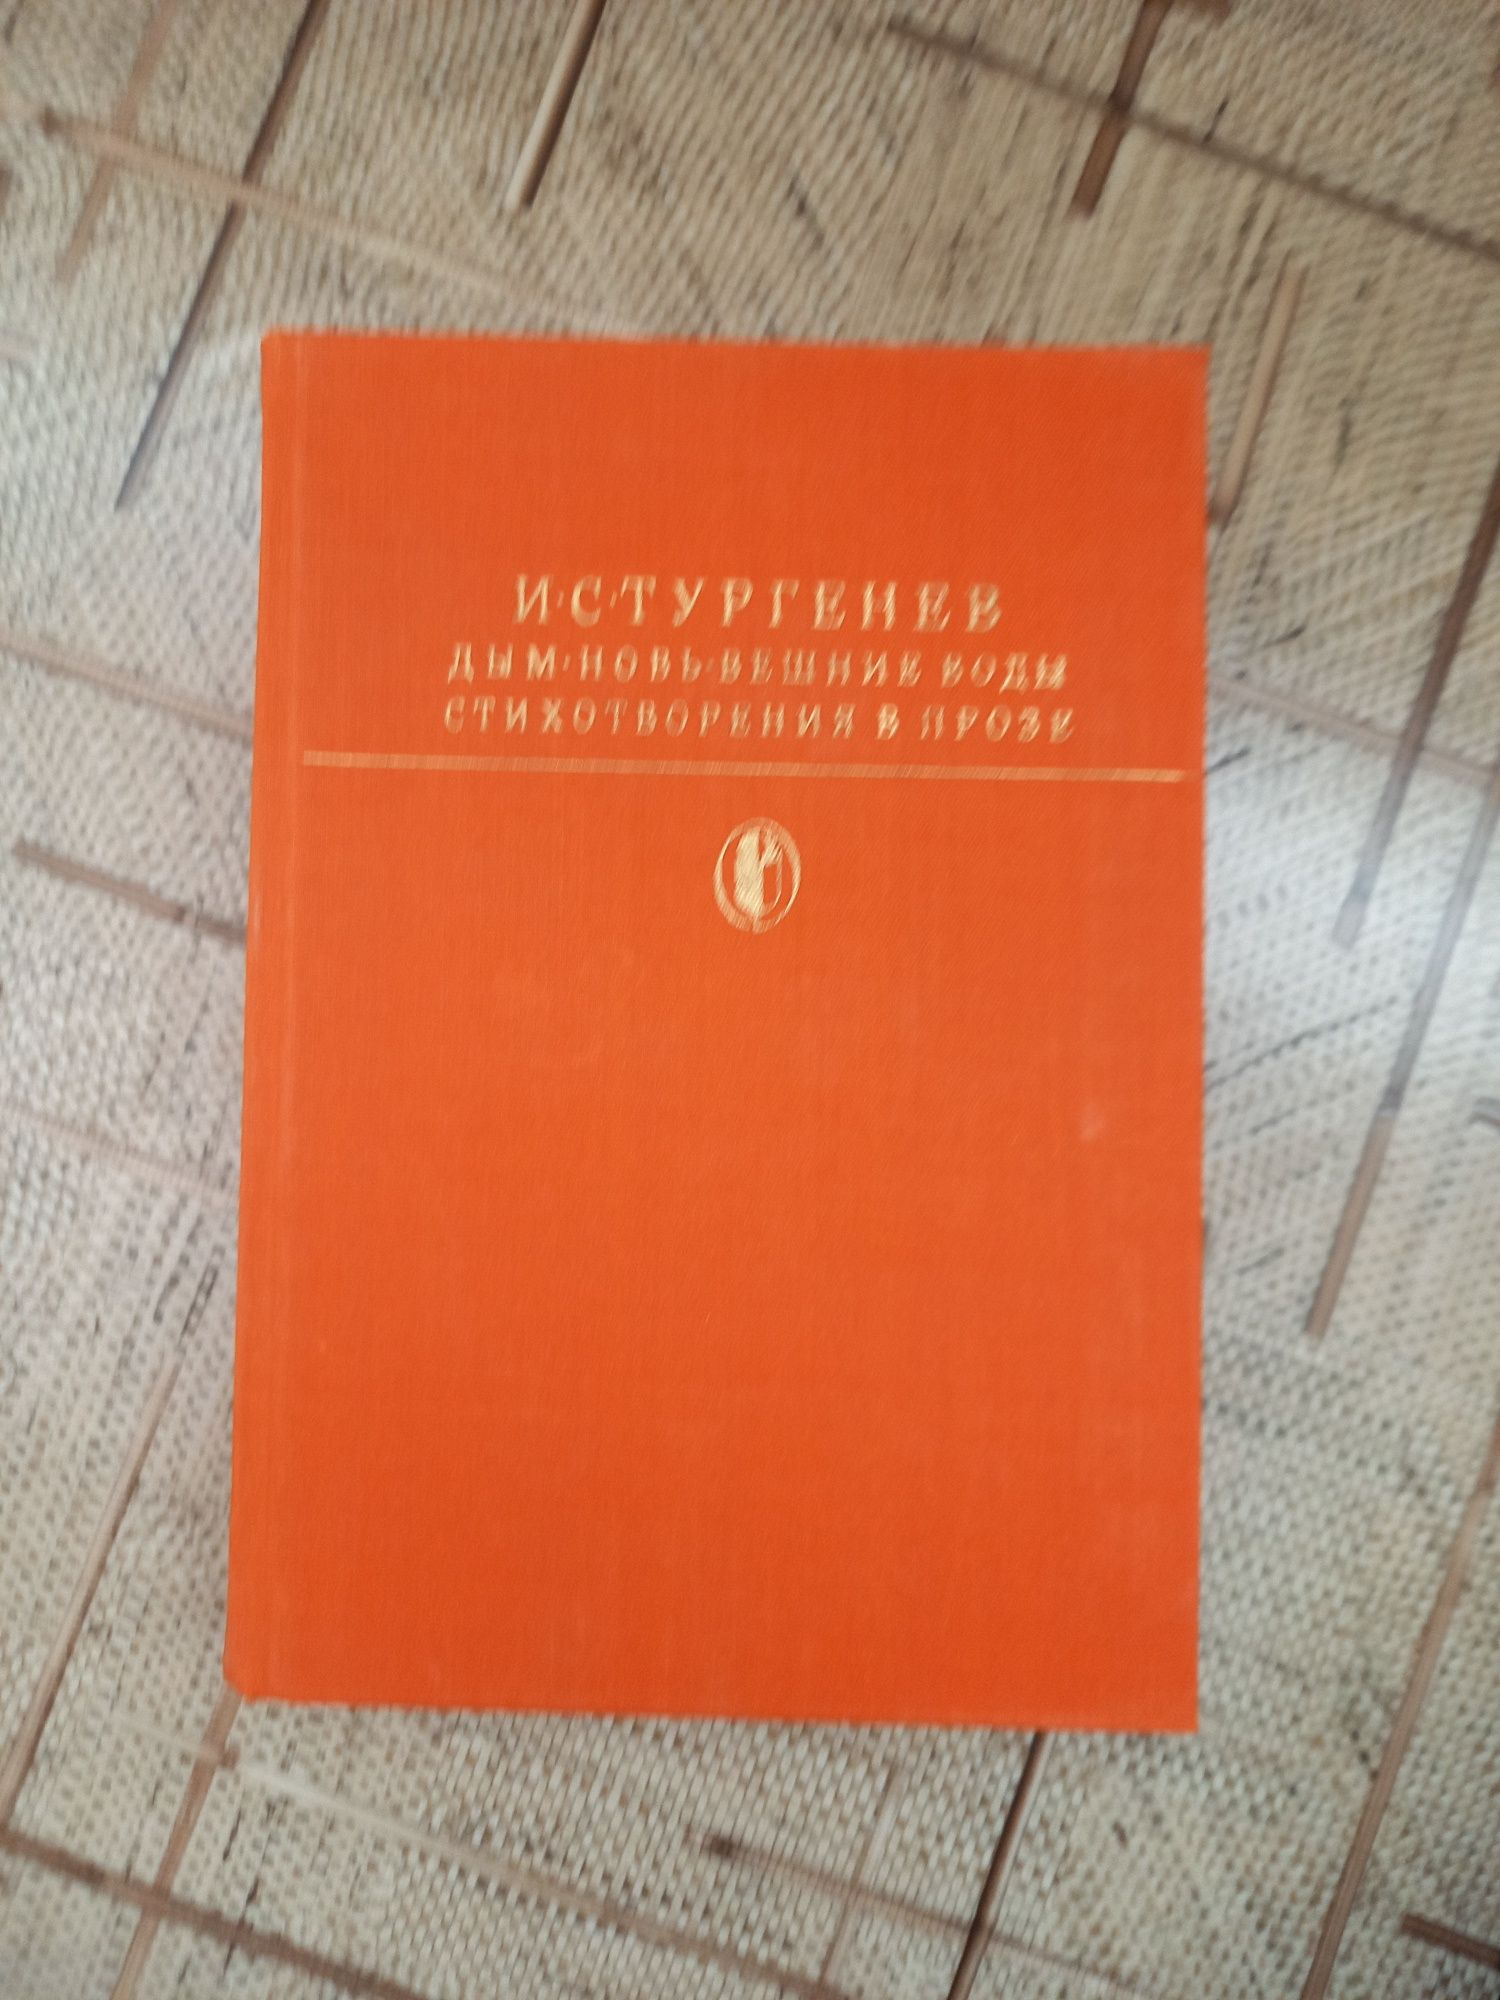 Книги И.С.Тургенева